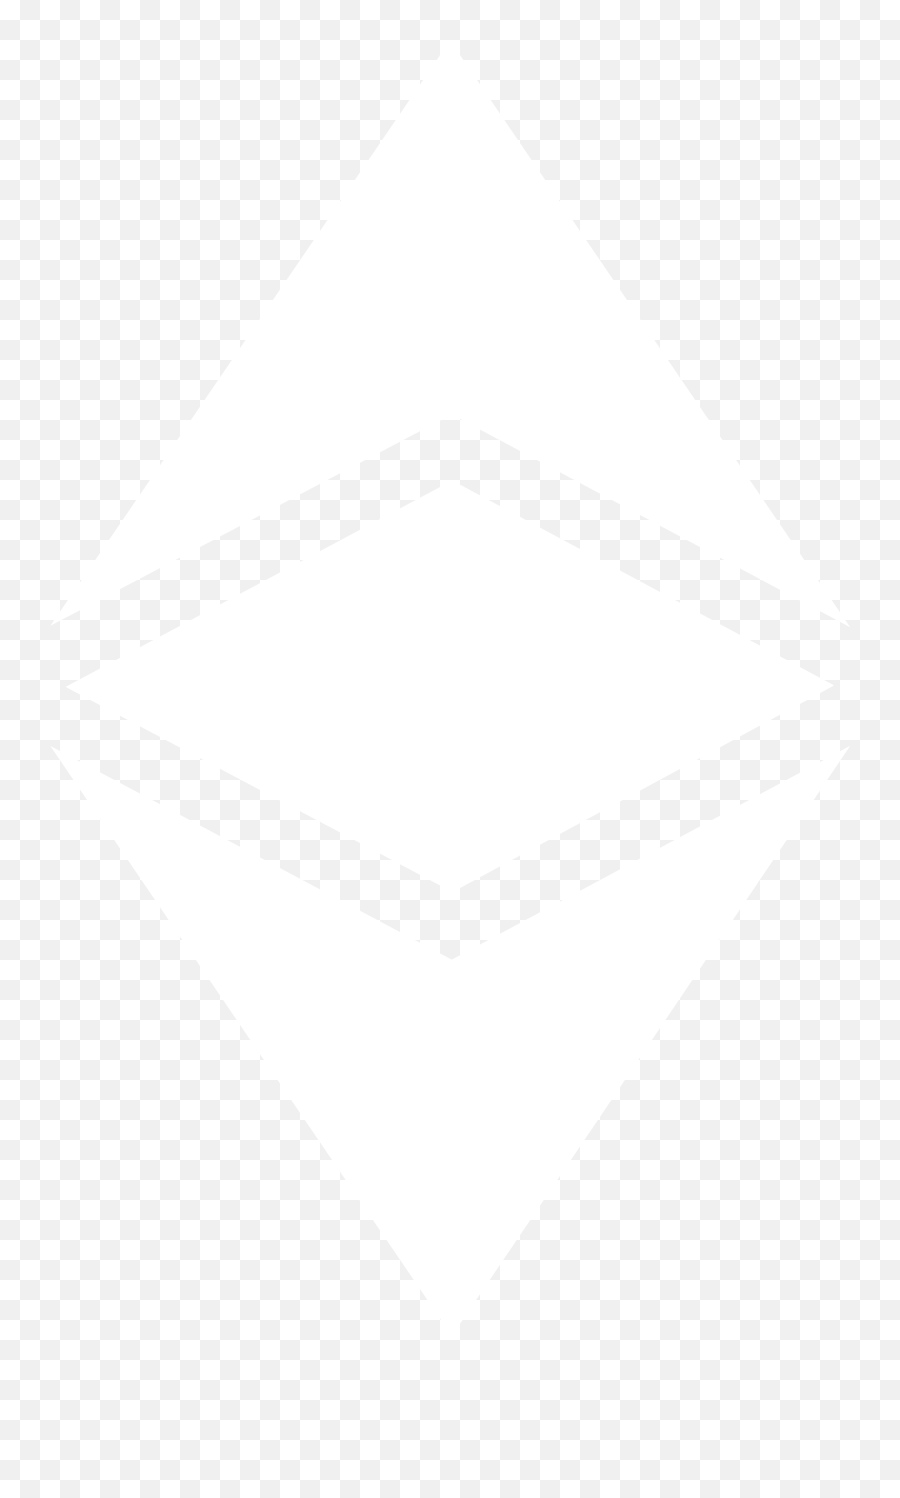 Ethereum Classic Logo Png Transparent U0026 Svg Vector - Freebie Johns Hopkins Logo White,Ethereum Logo Png